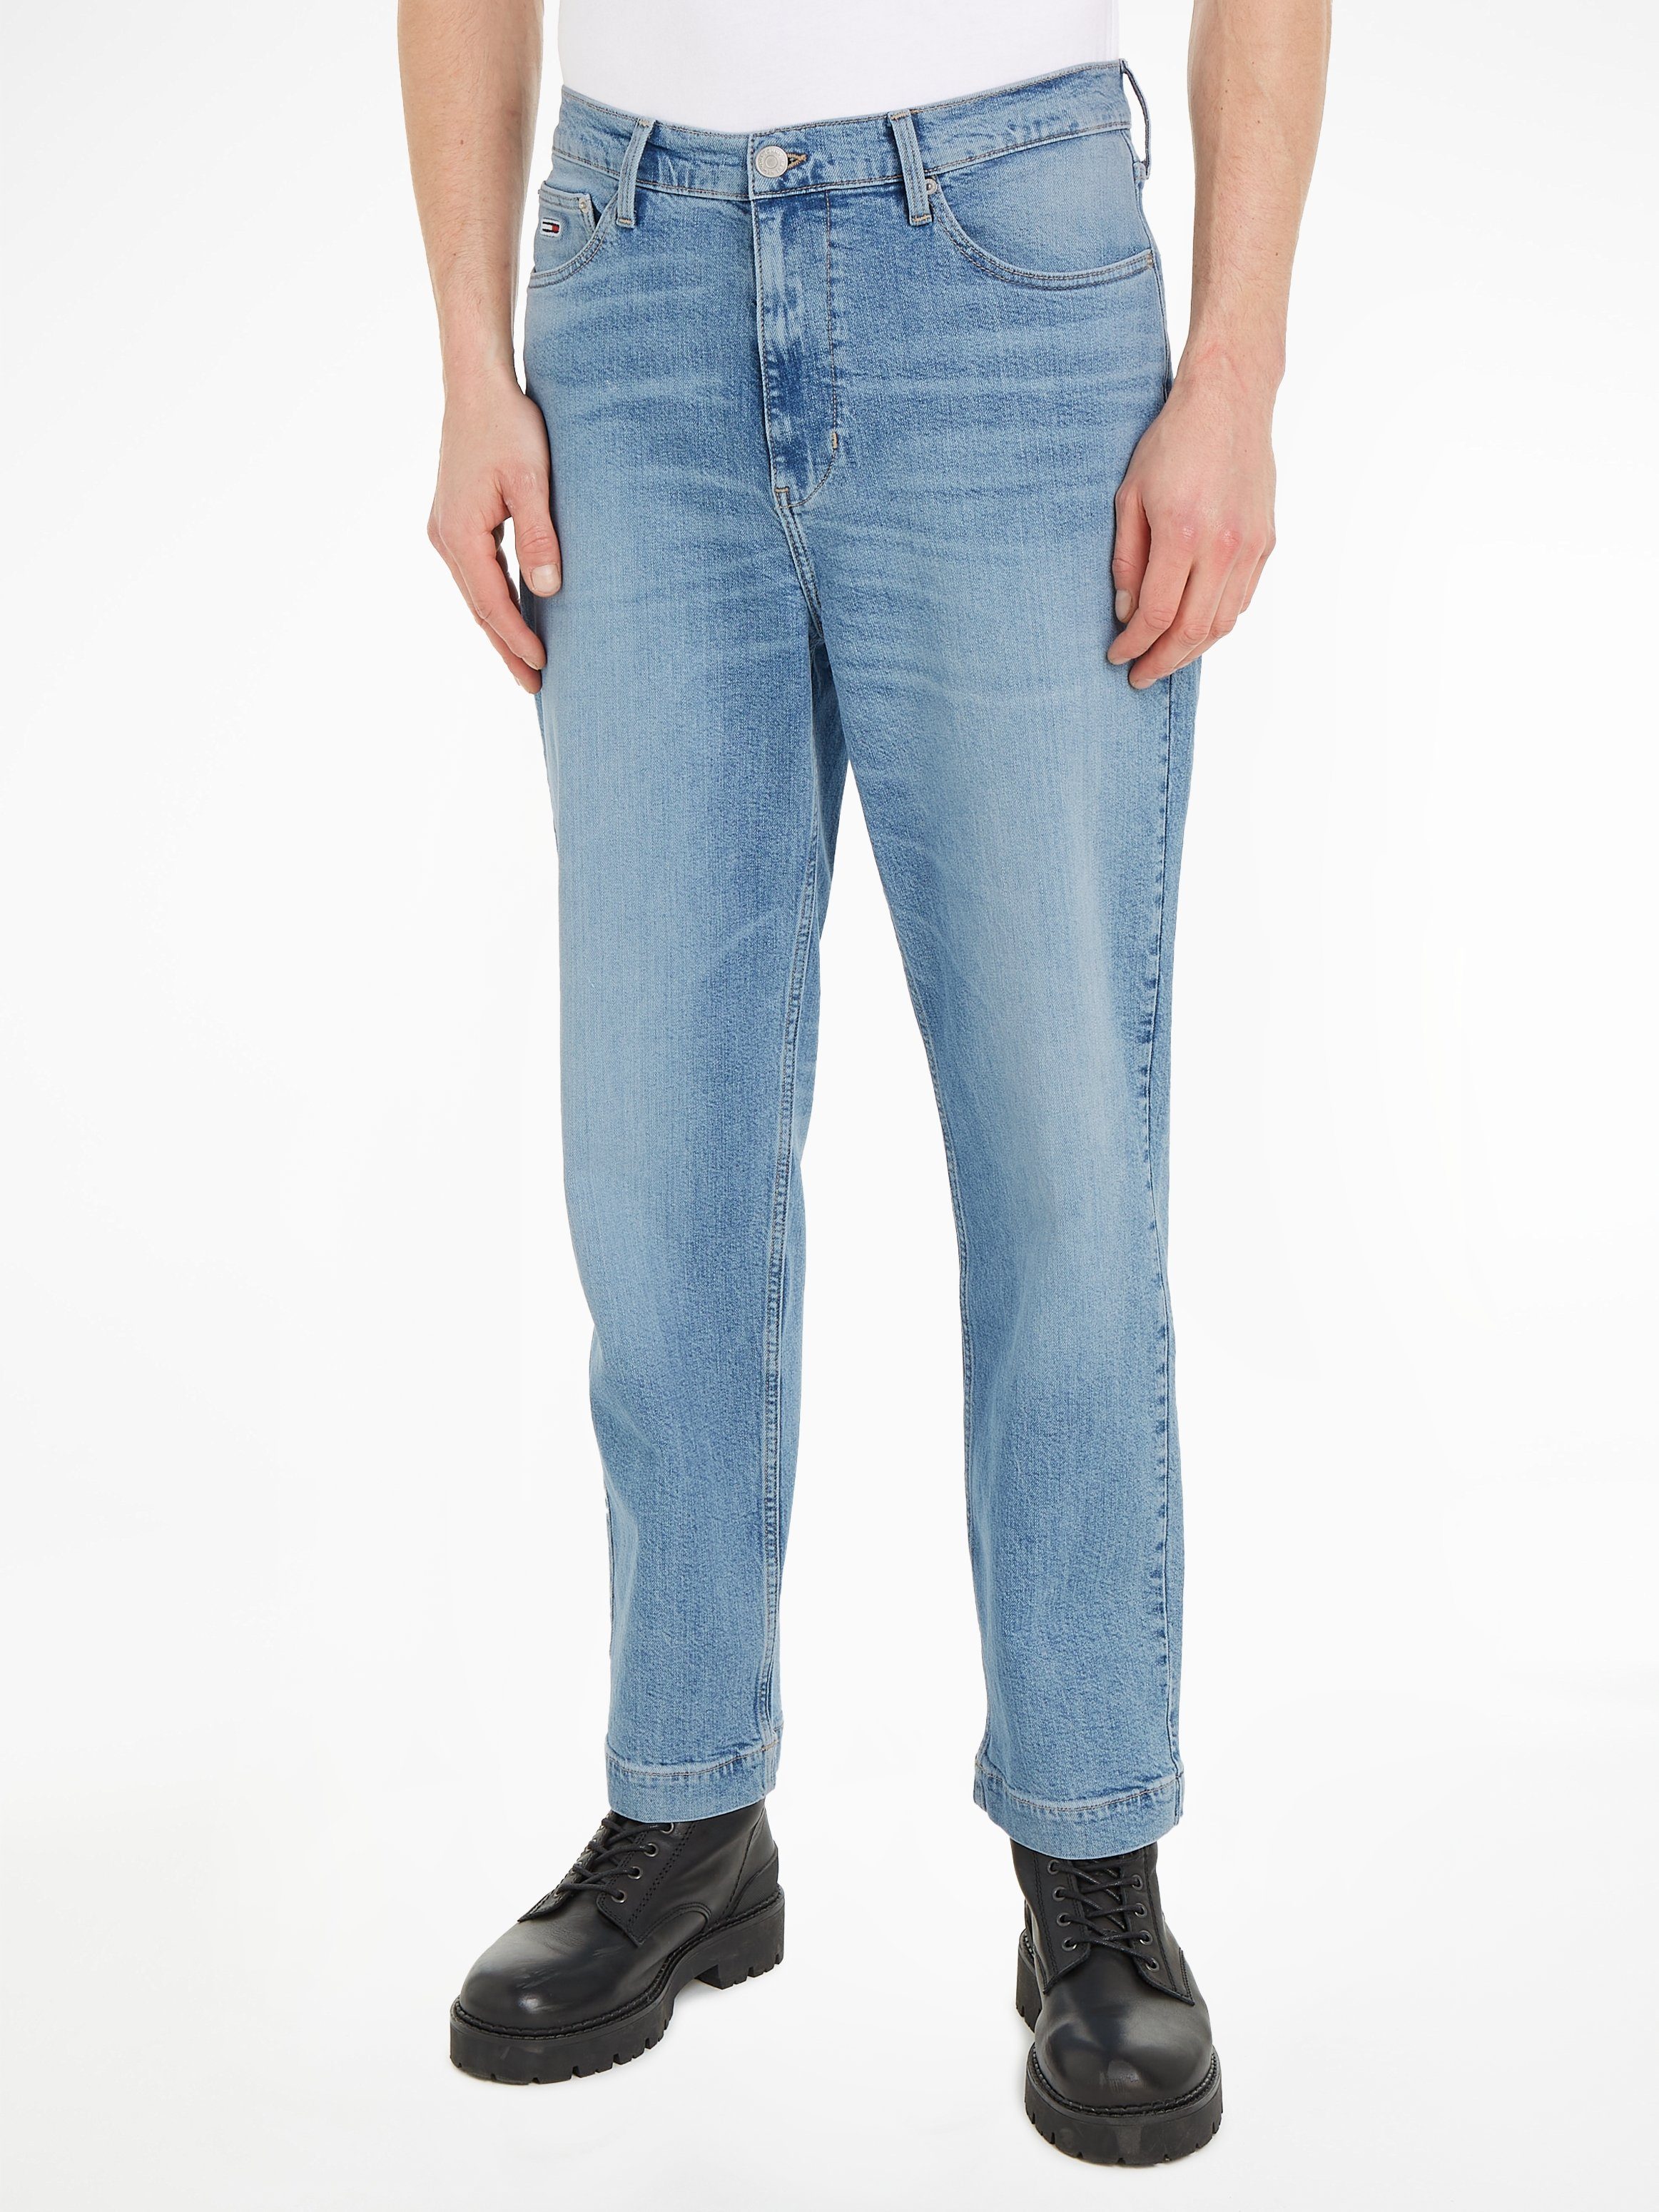 Jeans Straight-Jeans Denim 5-Pocket-Style Light JEAN Tommy SKATER im